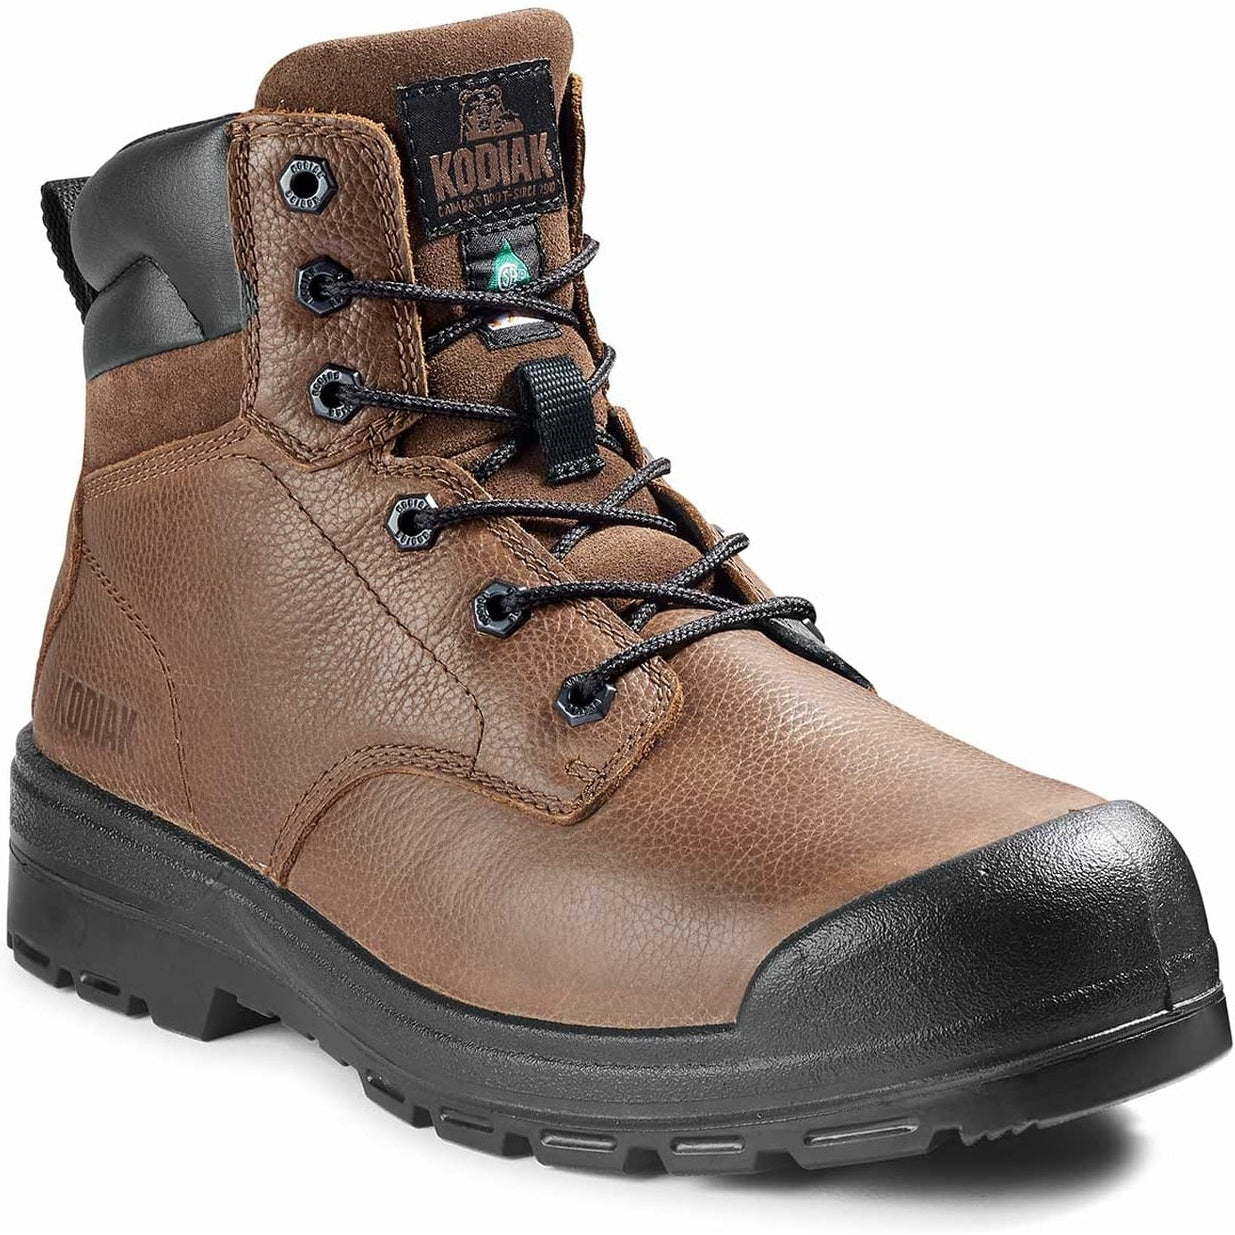 Kodiak Men's Greb 6" Steel Toe Slip Resist Safety Work Boot -Brown- 4TH4BN 7 / Wide / Brown - Overlook Boots